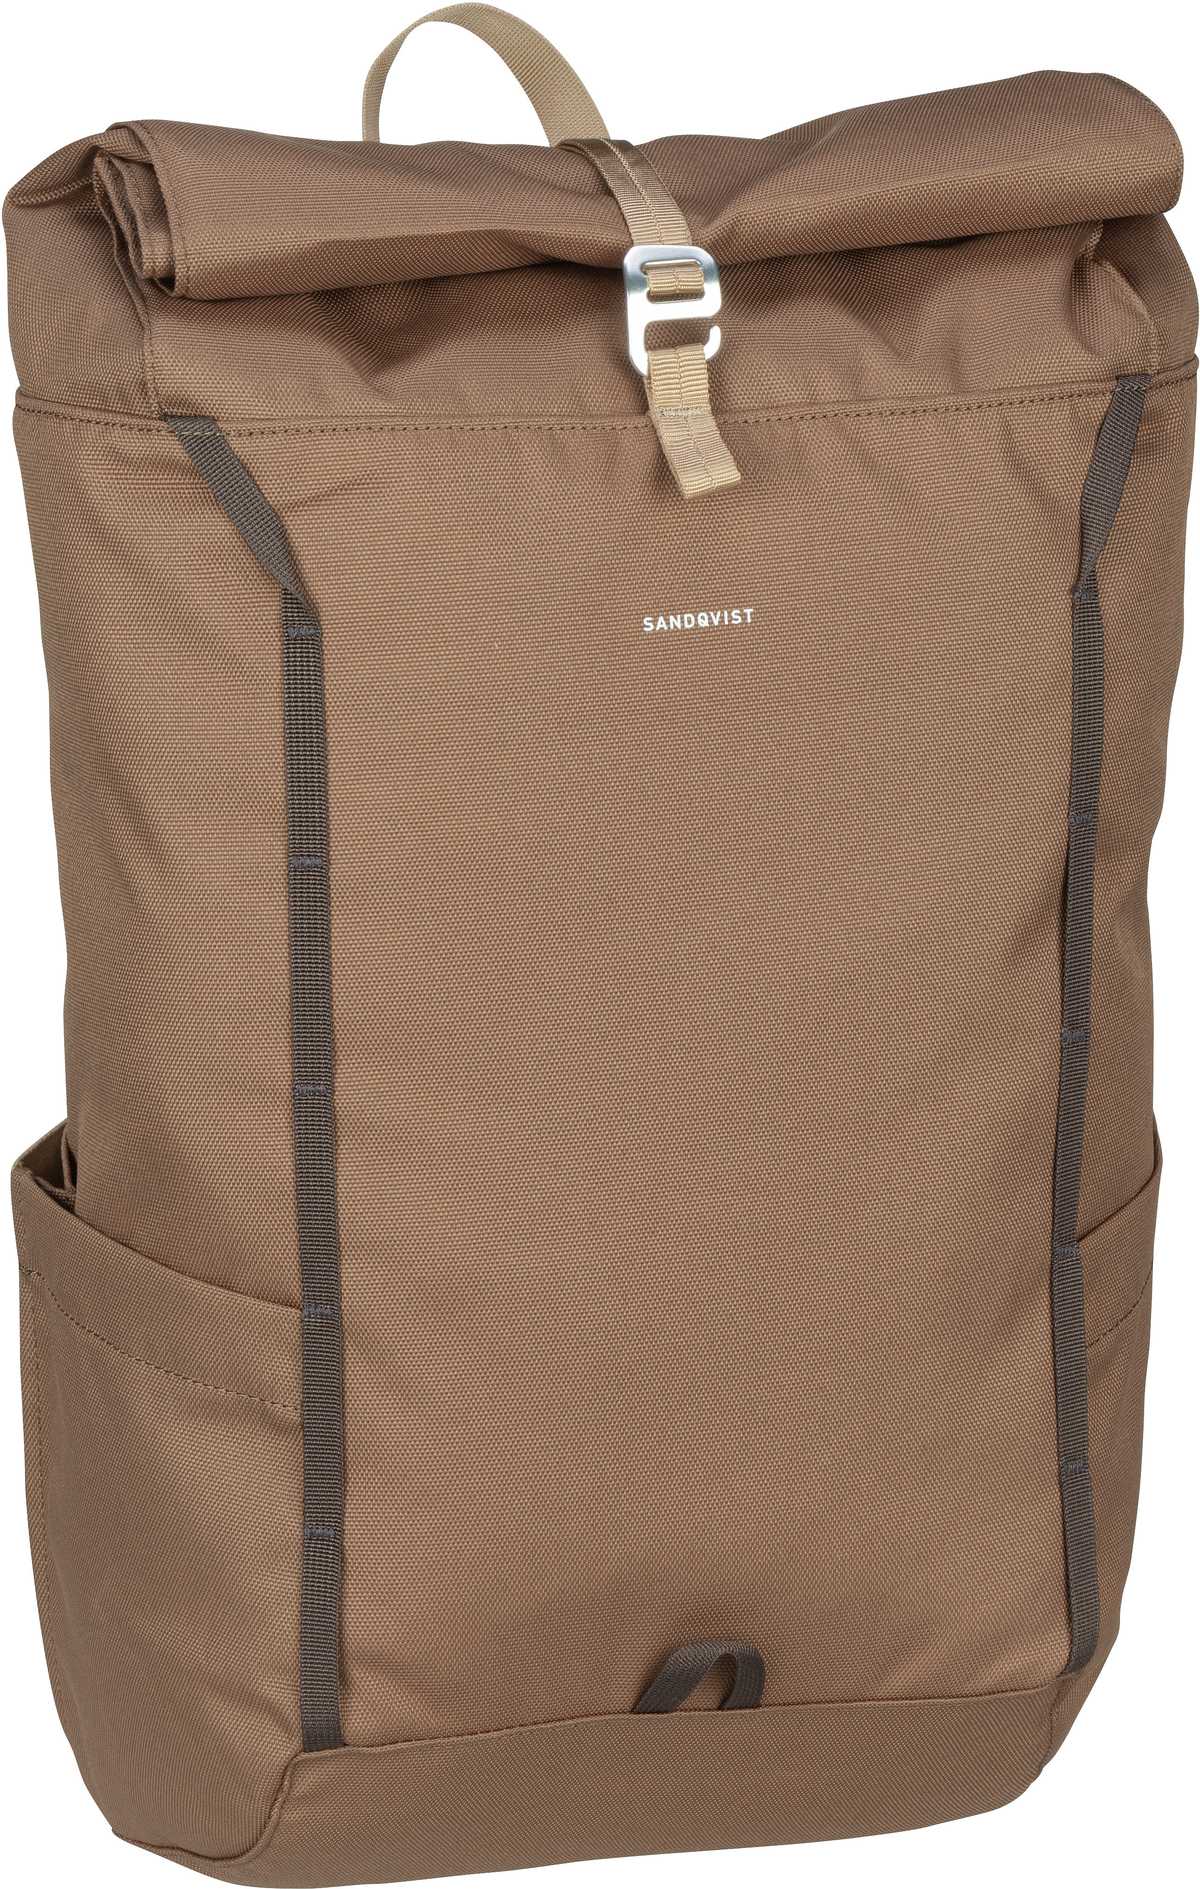 Sandqvist Arvid Rolltop Backpack  in Brown (15 Liter), Rolltop Rucksack